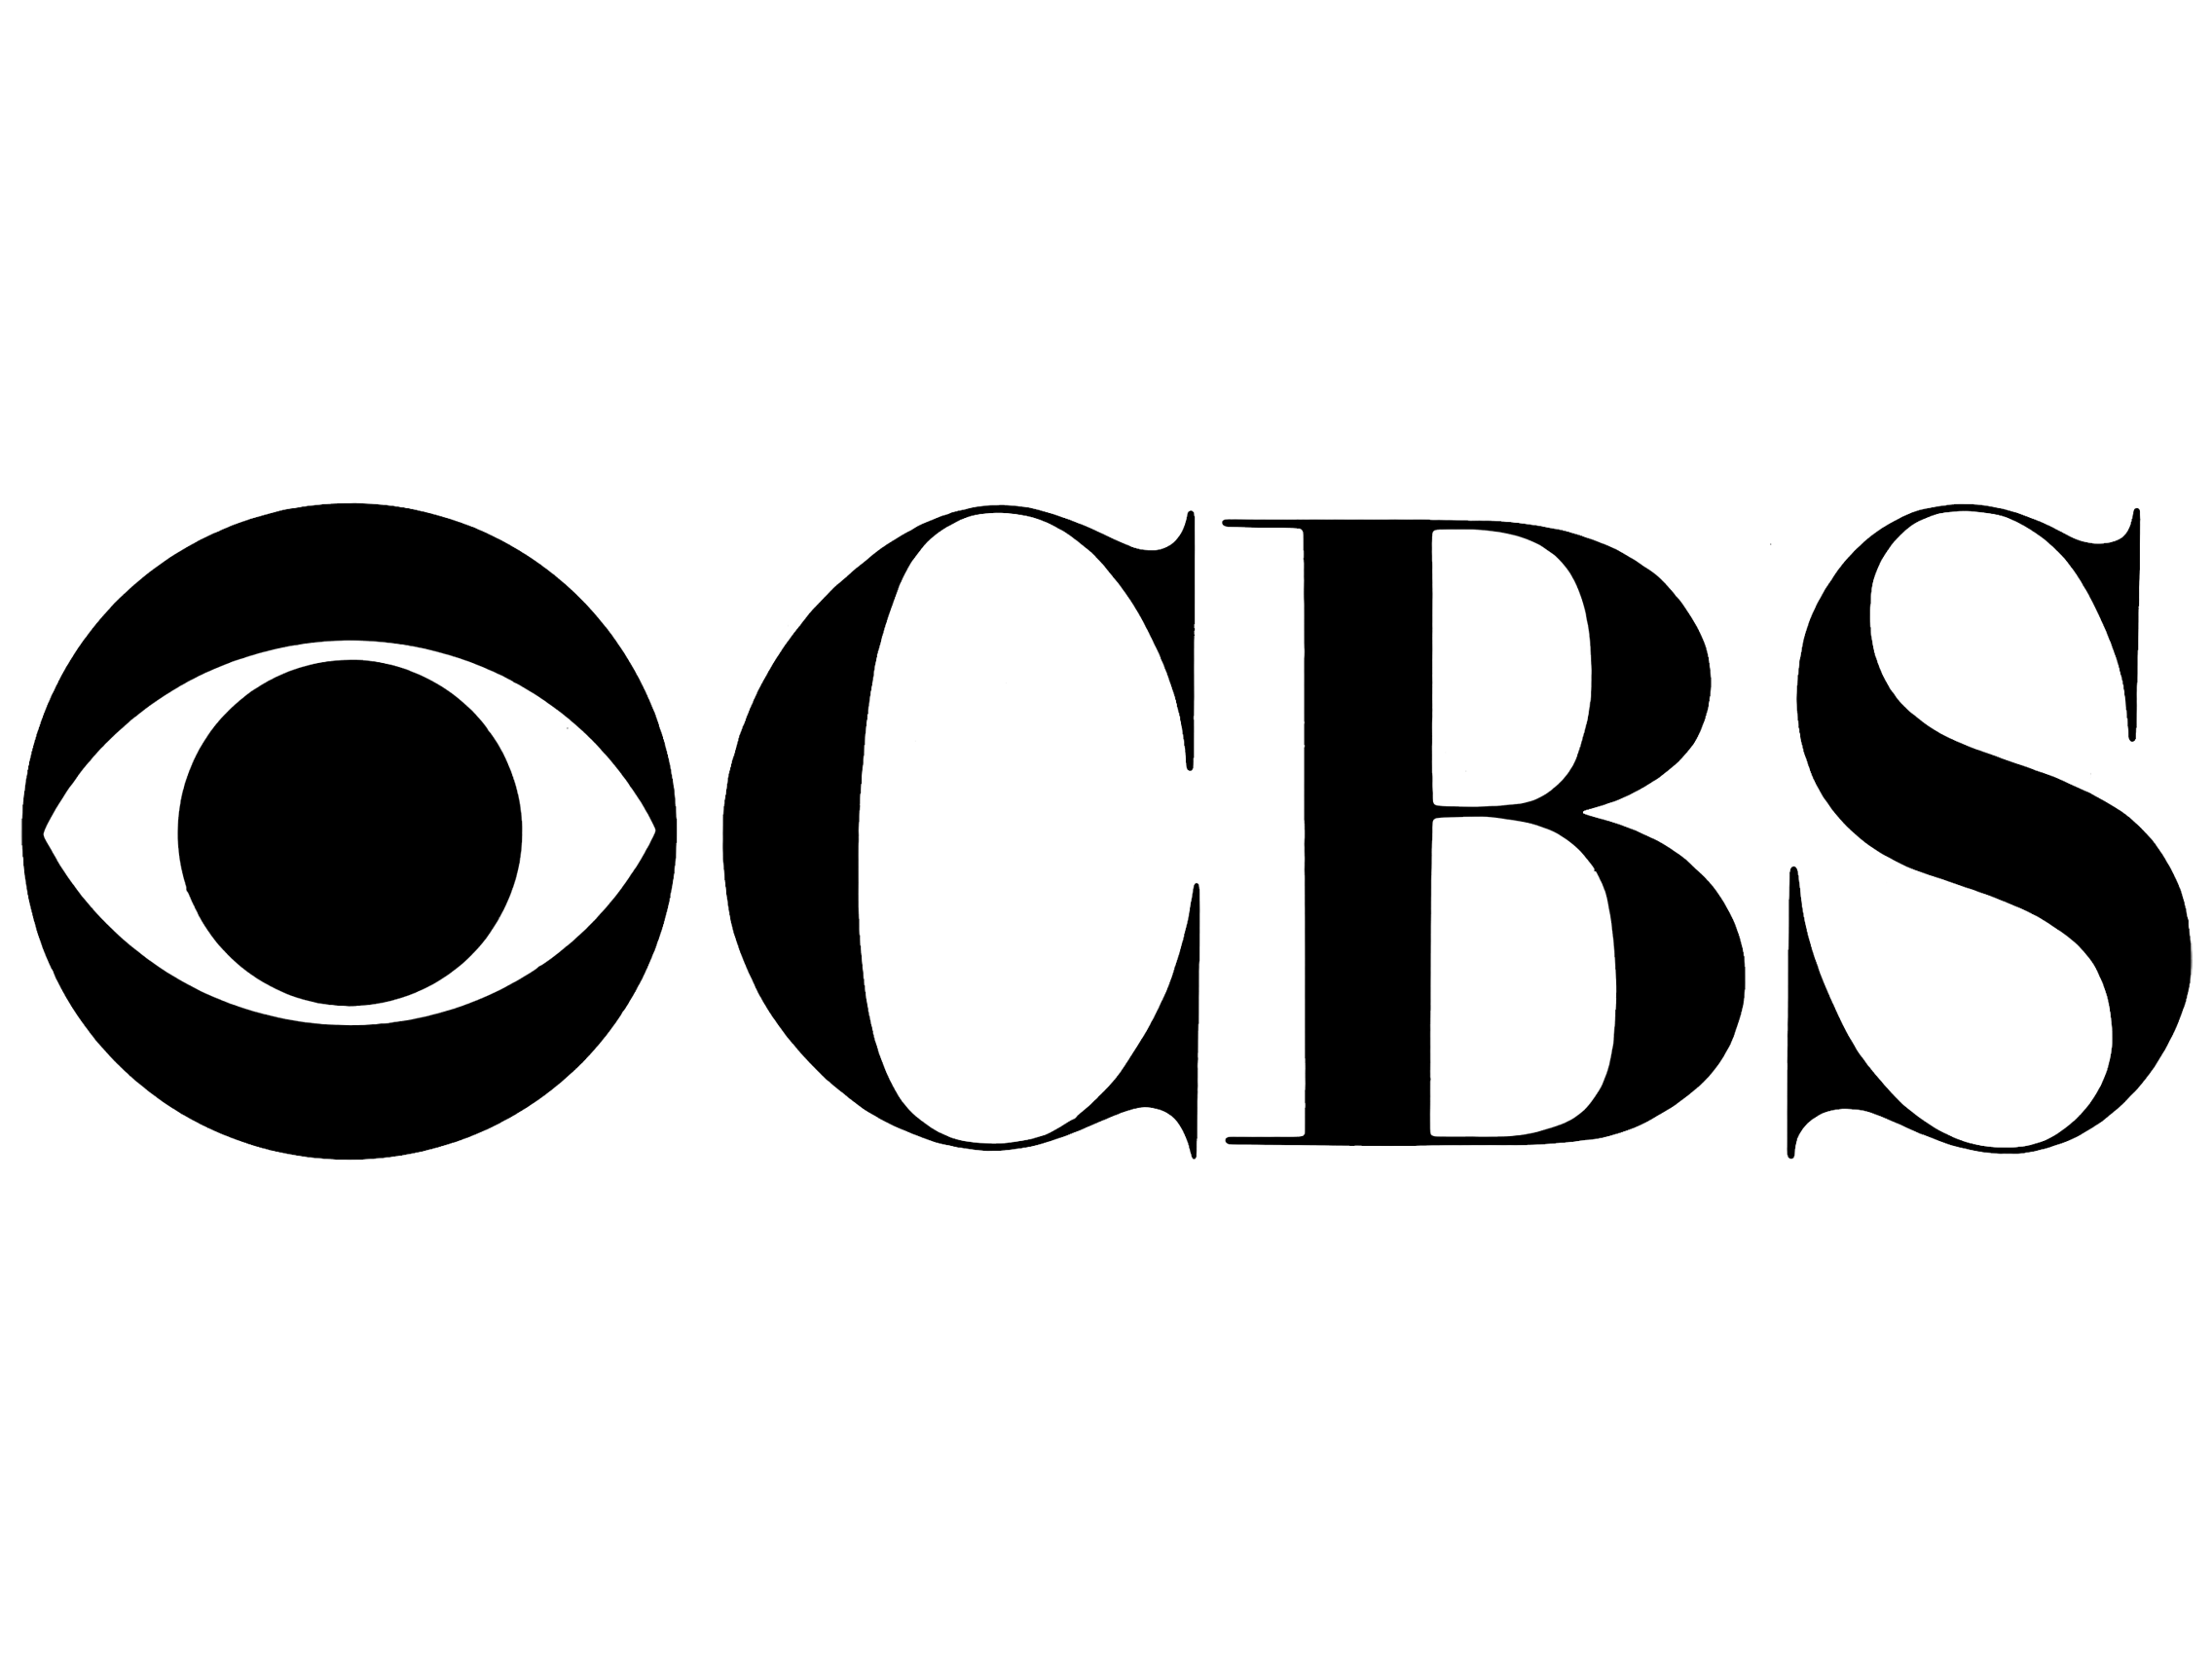 CBS.com Logo - cbs news logo | Edward Davis, LLC